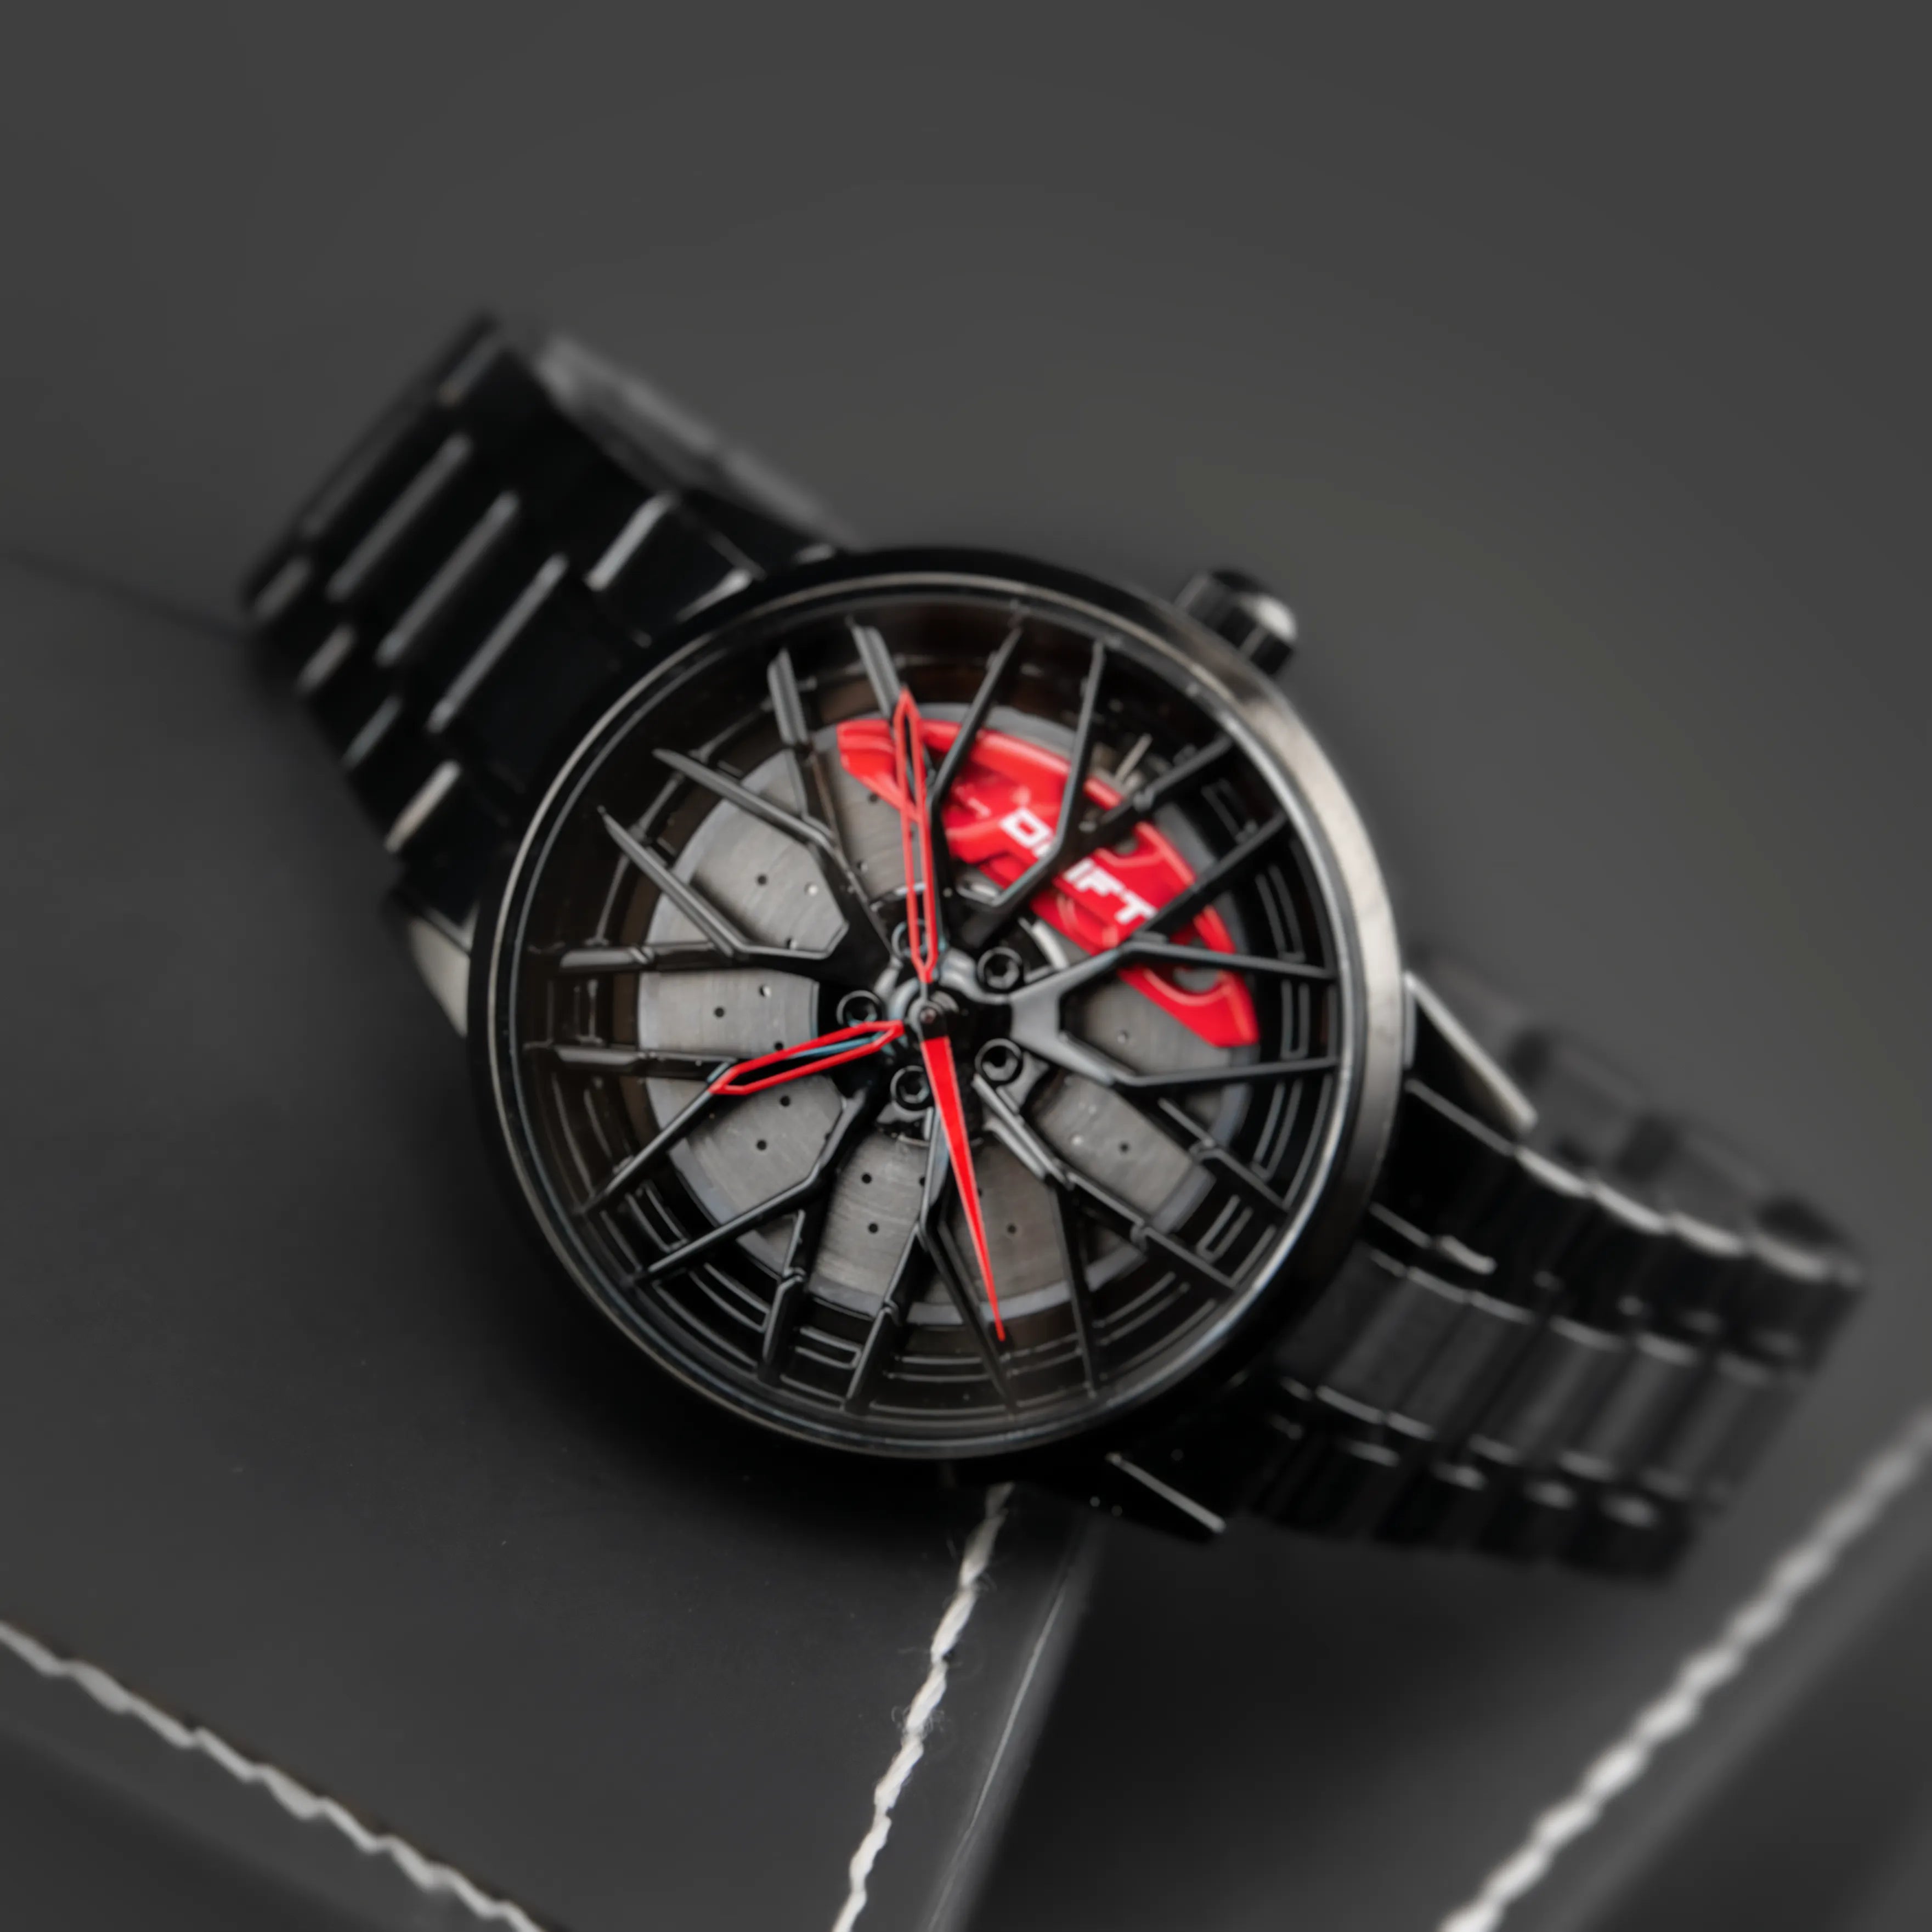 3D Rotating Sports Car Wheel Watch| Alibaba.com